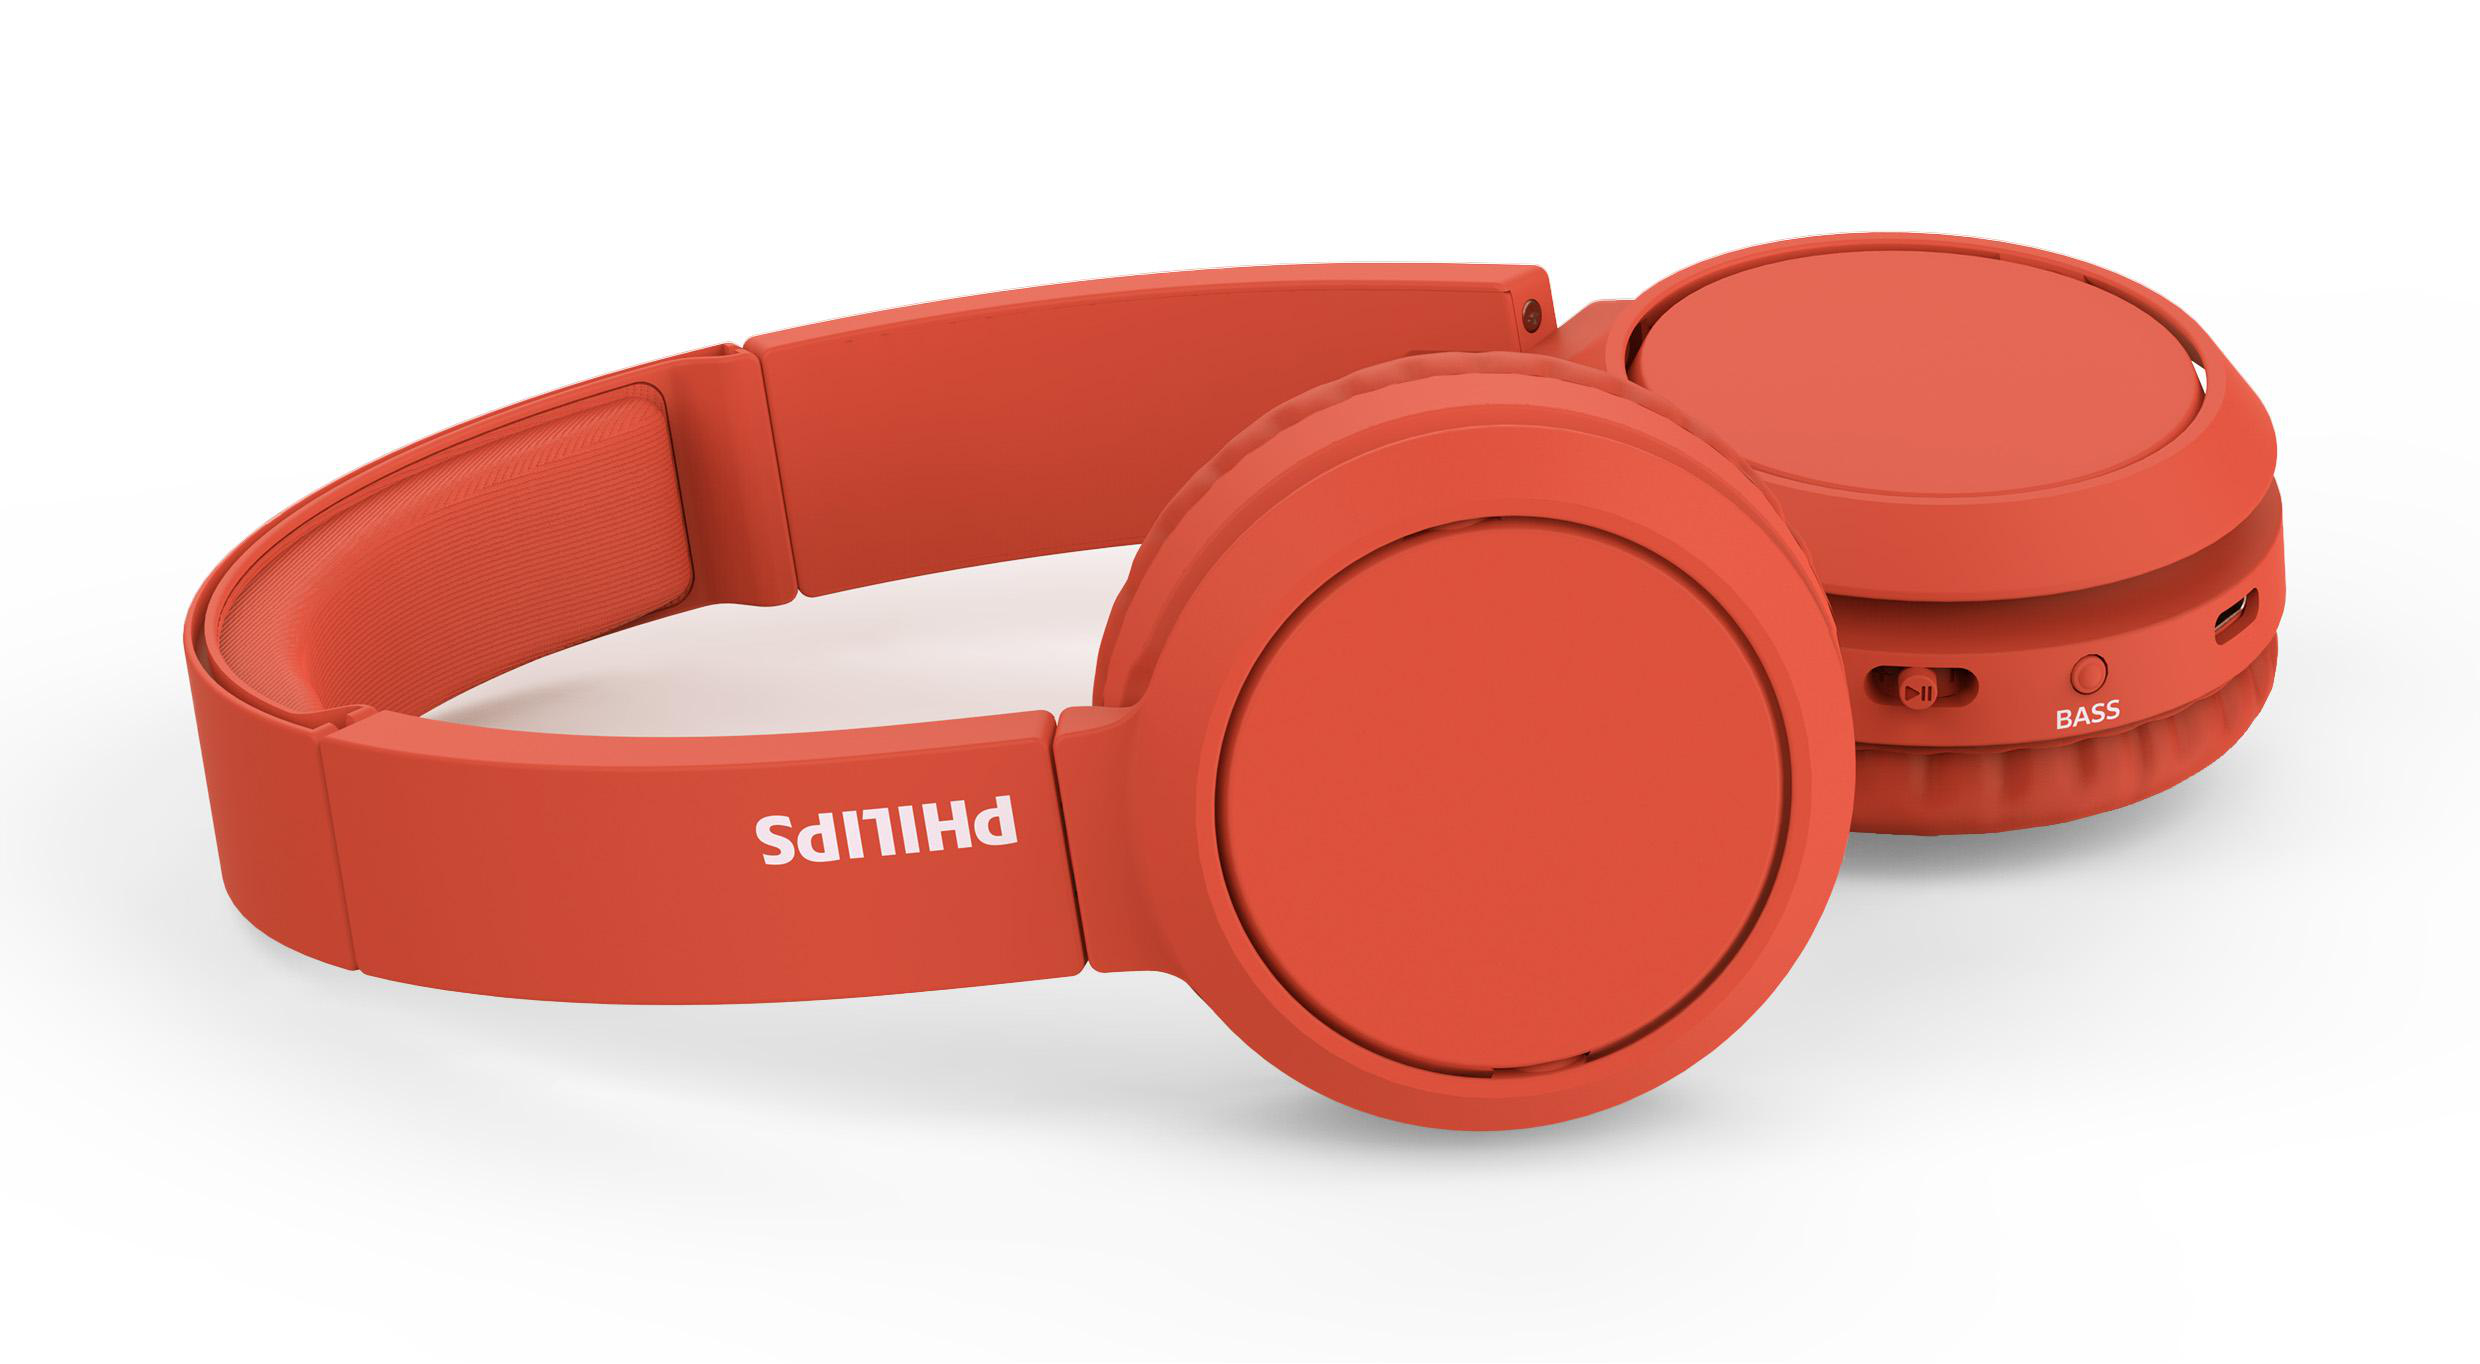 Rot Bluetooth Kopfhörer PHILIPS On-ear H4205RD/00,